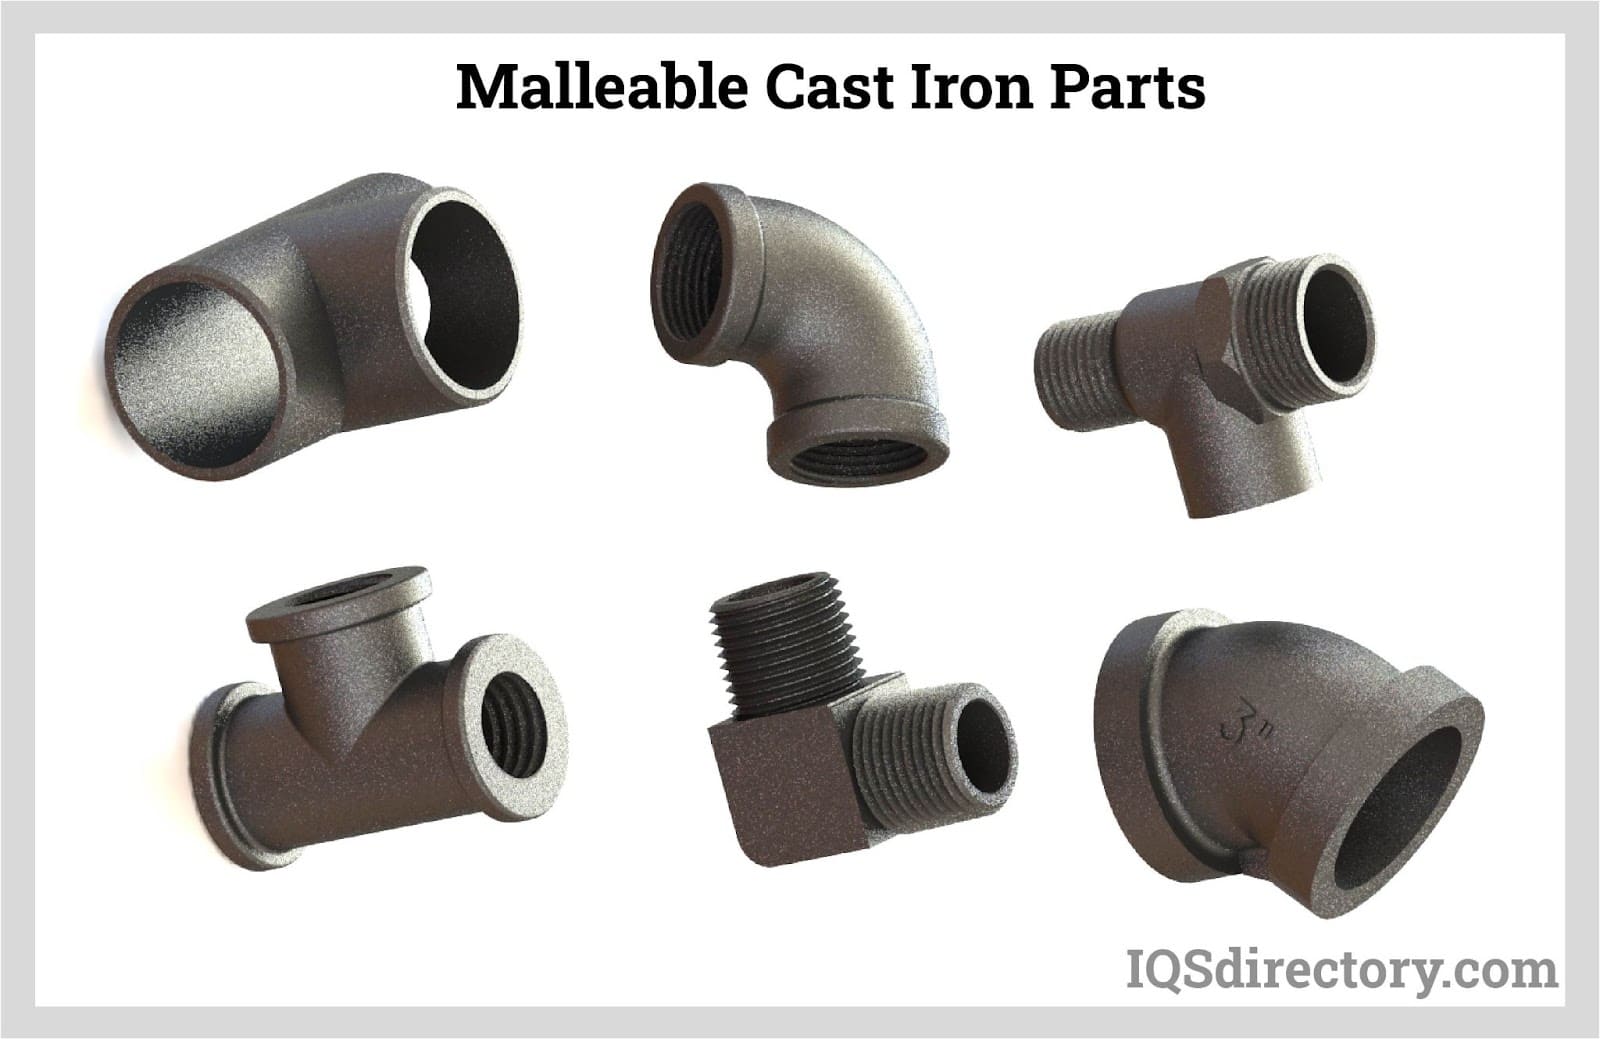 Malleable Cast Iron Parts